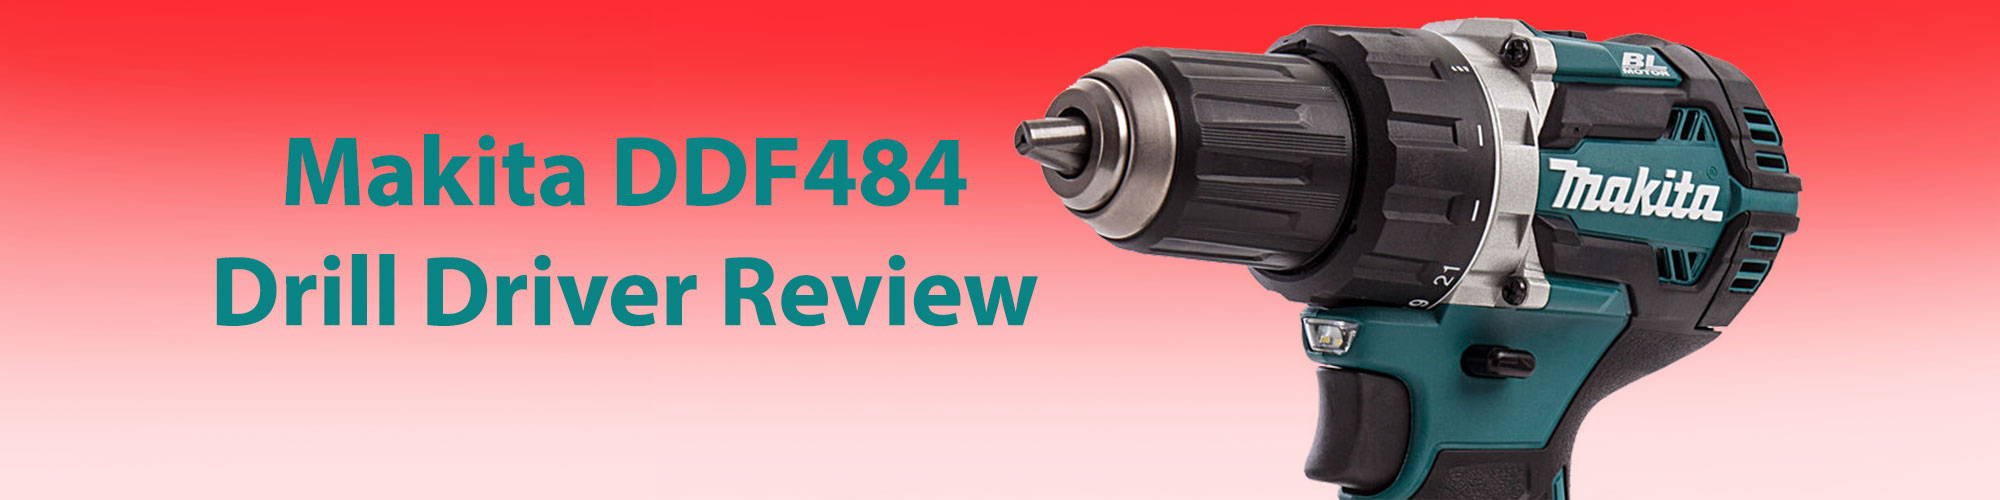 DDF484 Makita Drill Driver Review